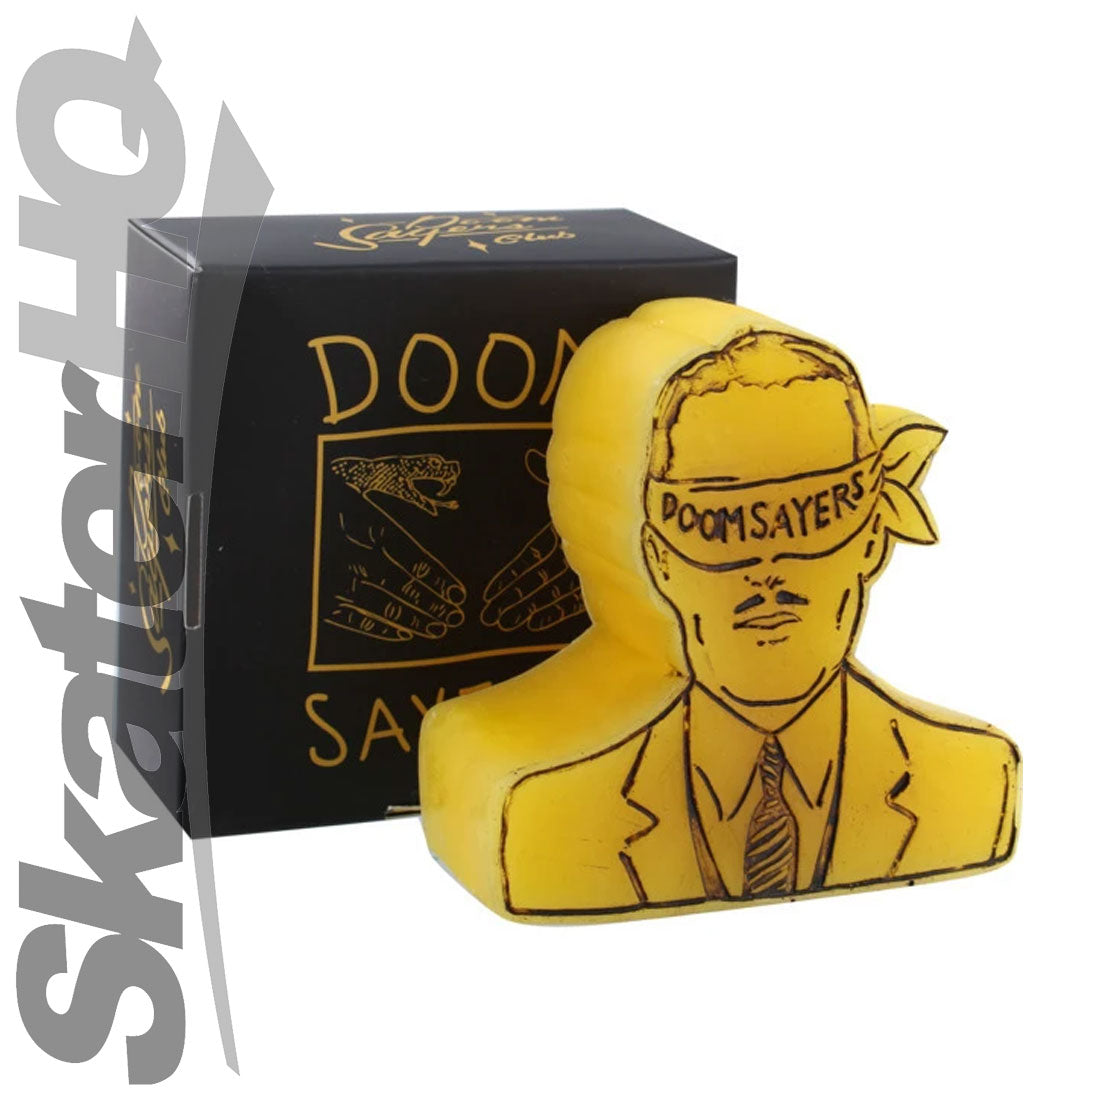 Doom Sayers Club Guy Wax - Butter Skateboard Accessories